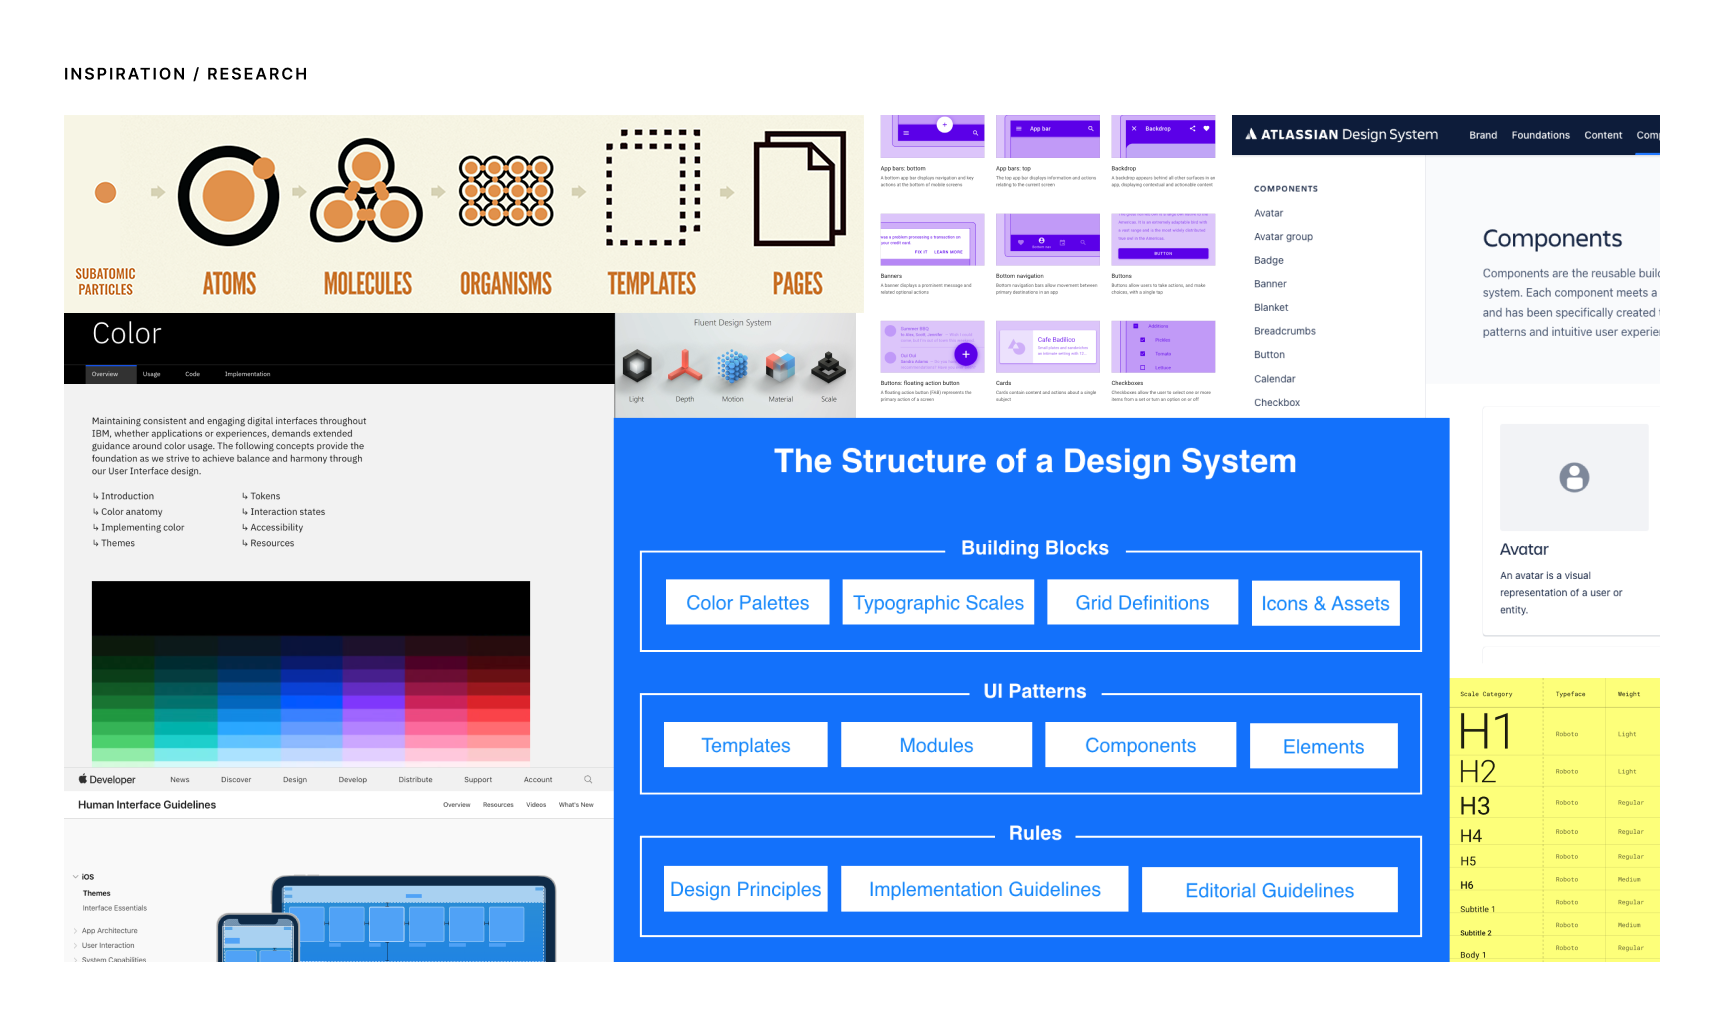 Inspiration images for building a design system